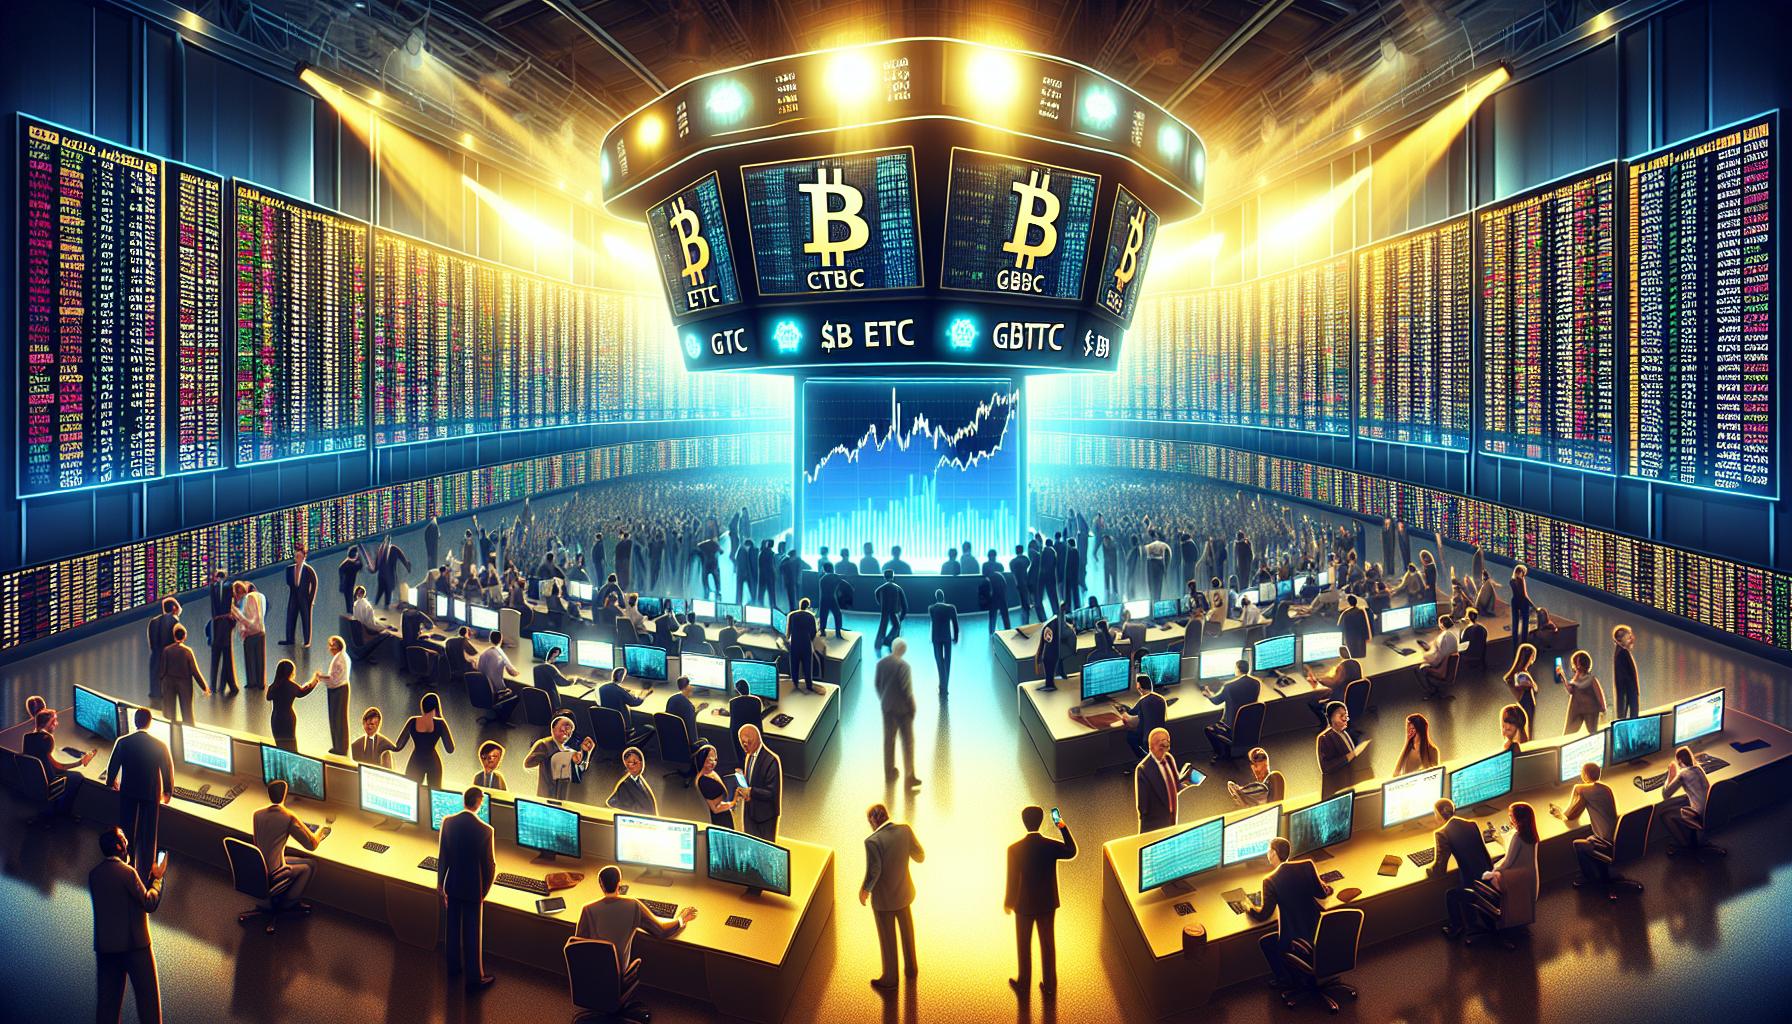 Bitcoin Bulls Buoyed by FTX's B GBTC Sale | FinOracle